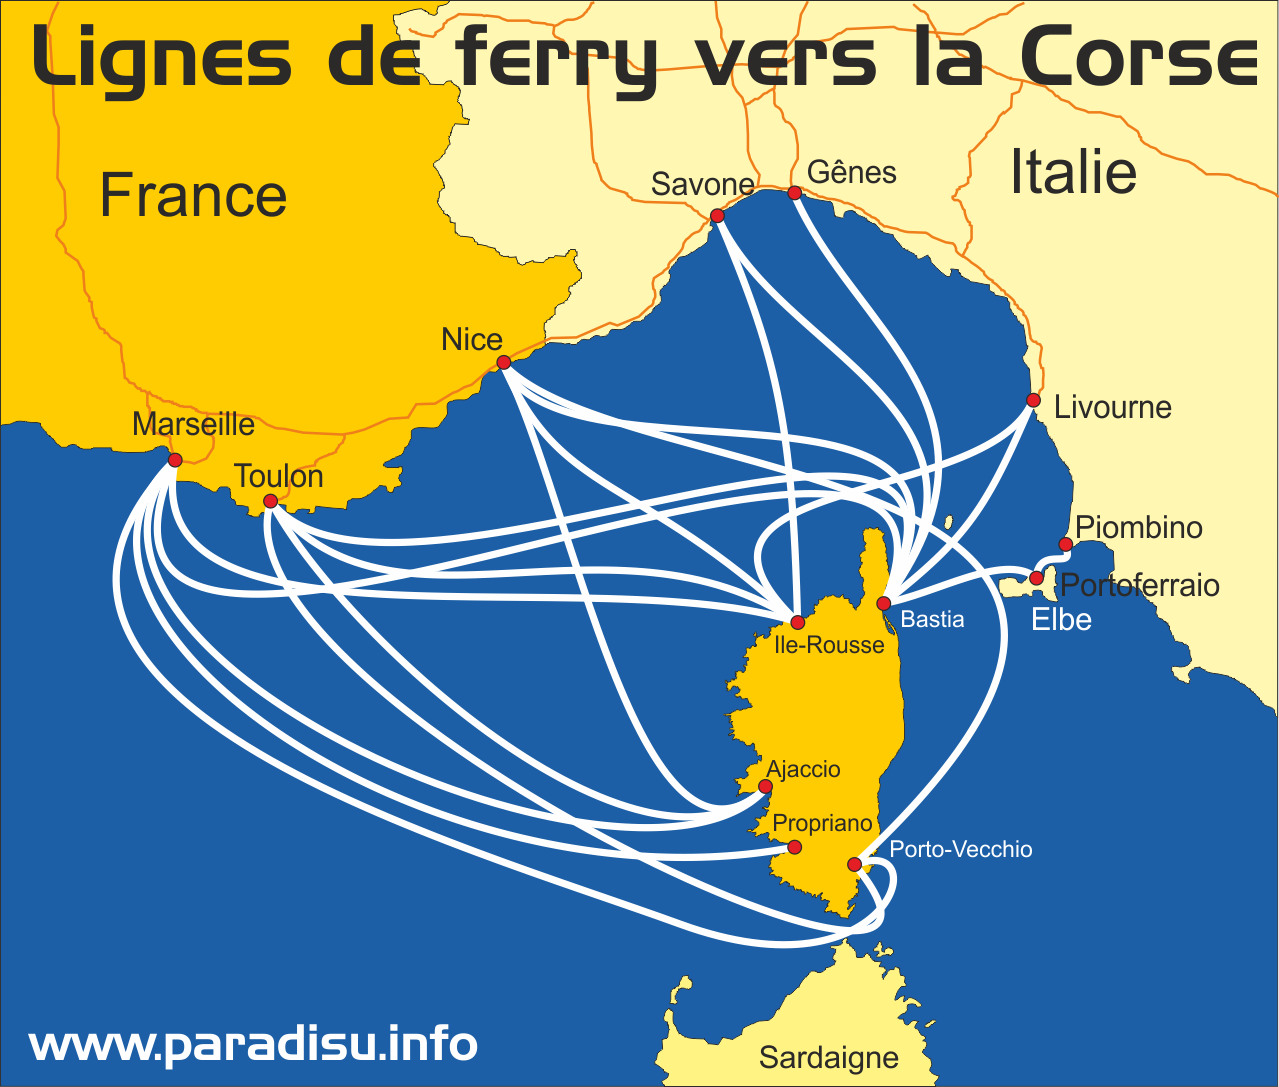 Ferries vers la Corse